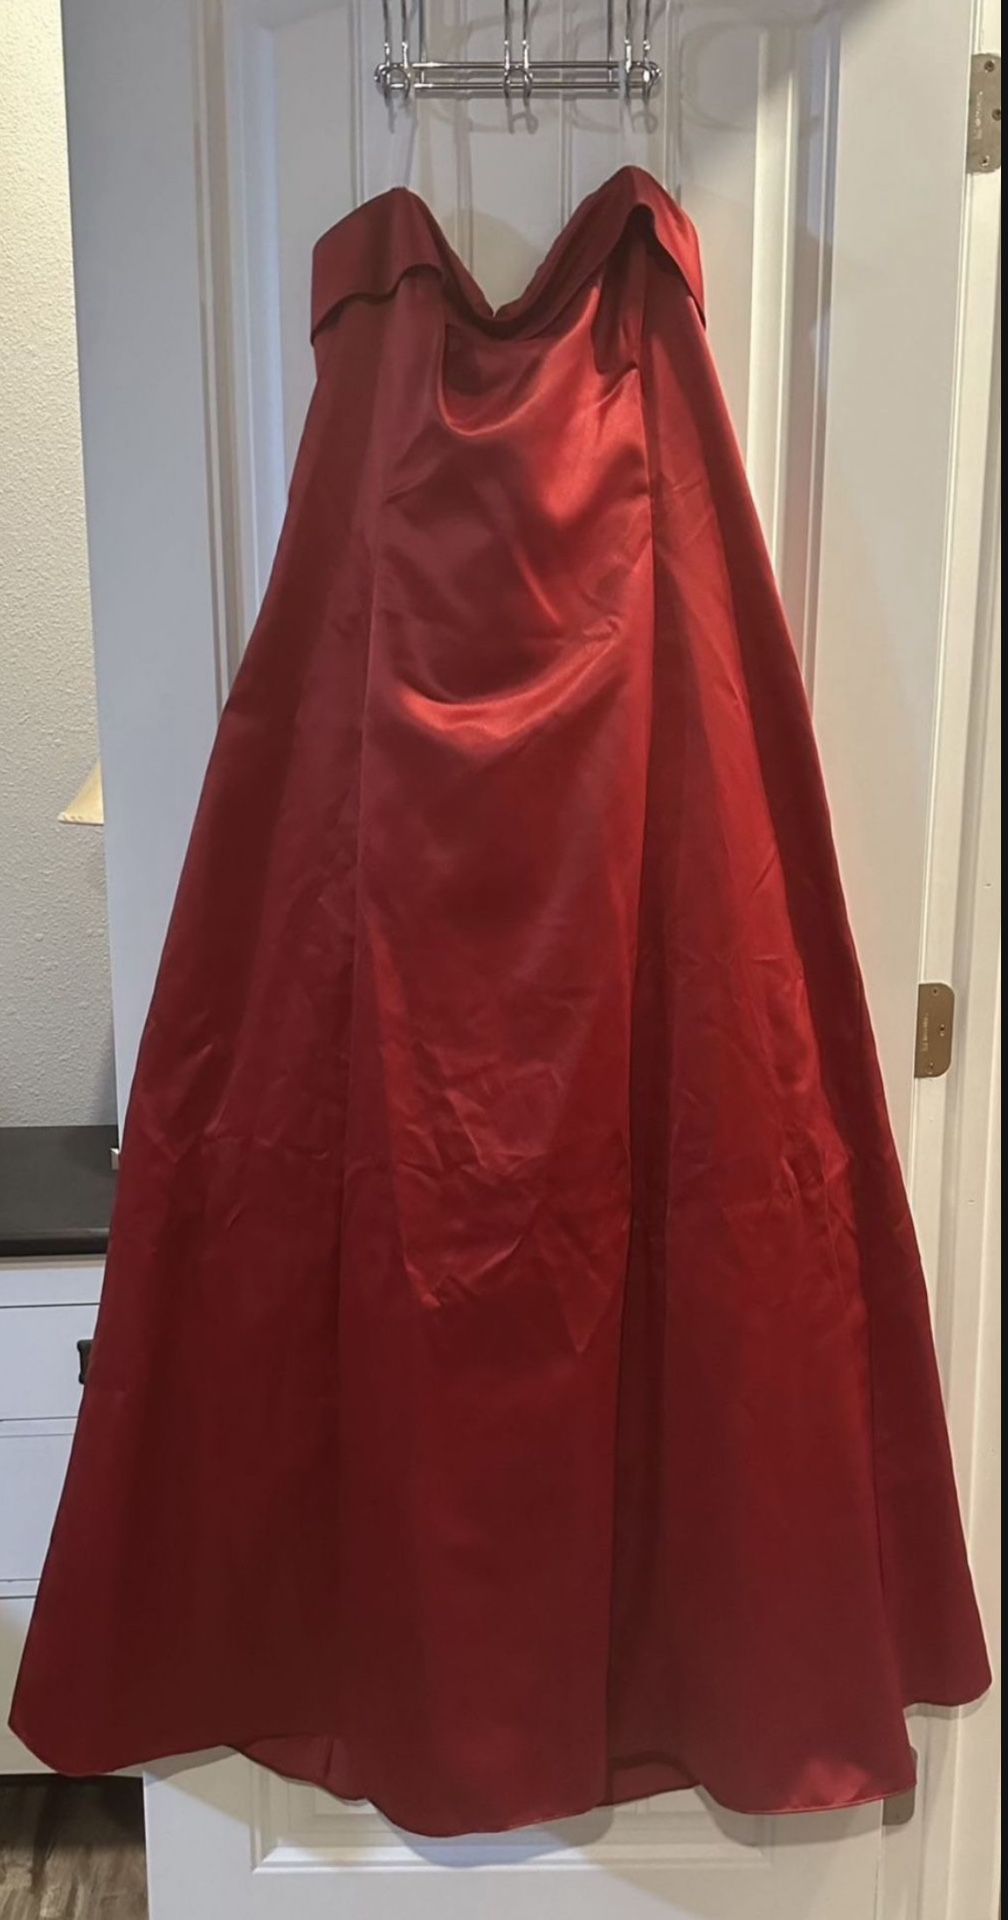 Beautiful Strapless Red Dress